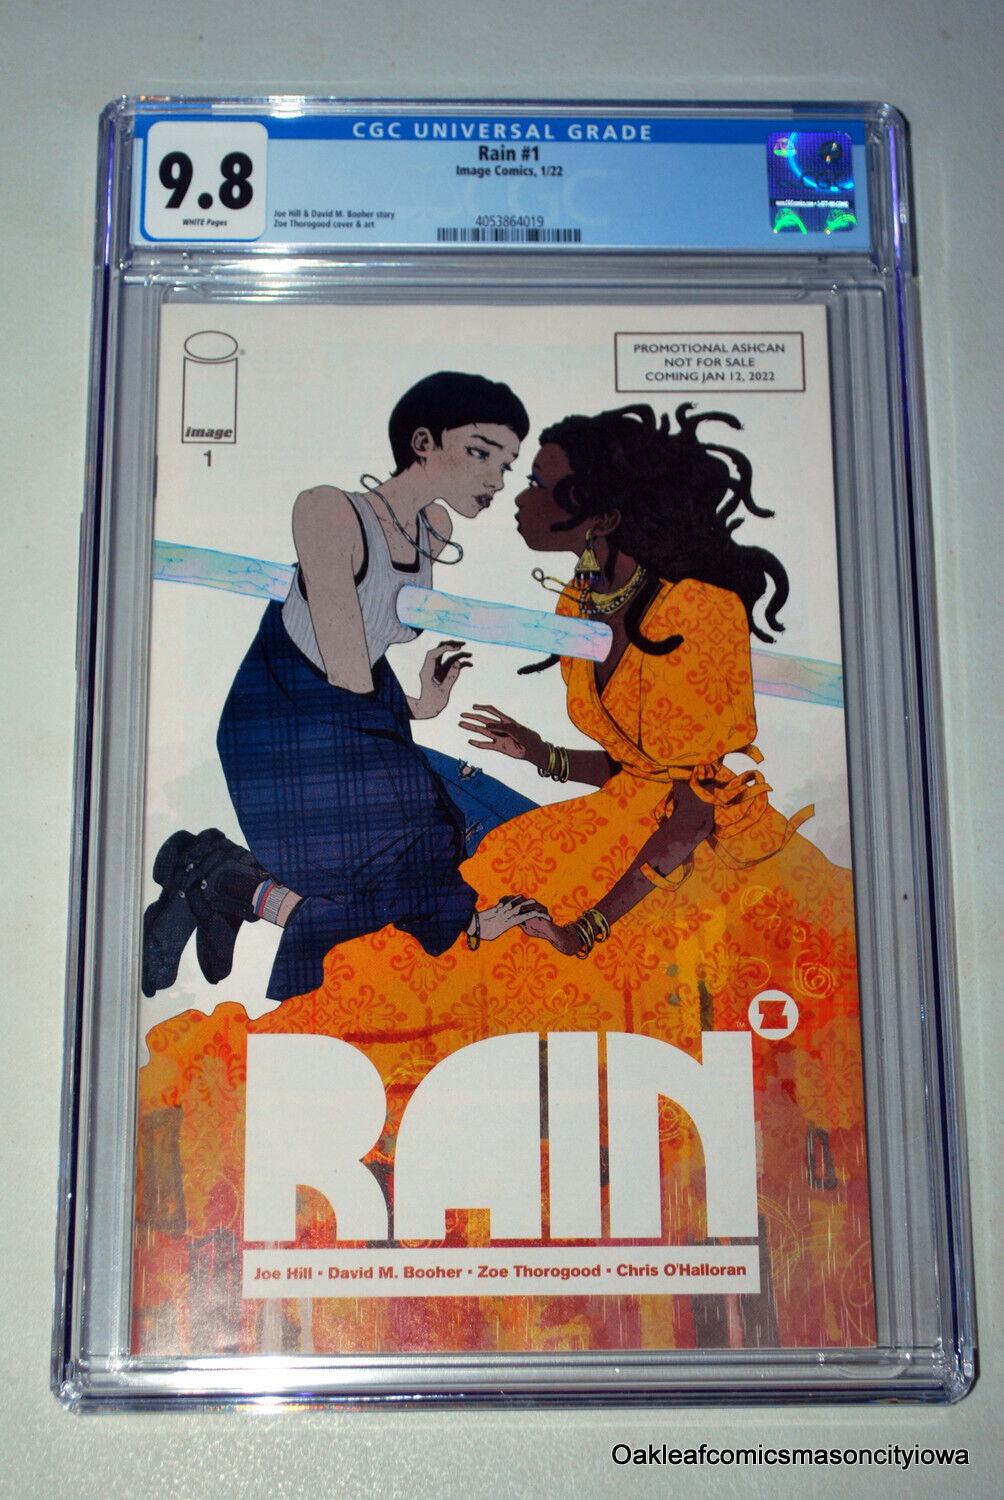 Rain Joe Hill\'s 1A Thorogood art Image CGC 9.8 2022 RARE Promotional Ashcan